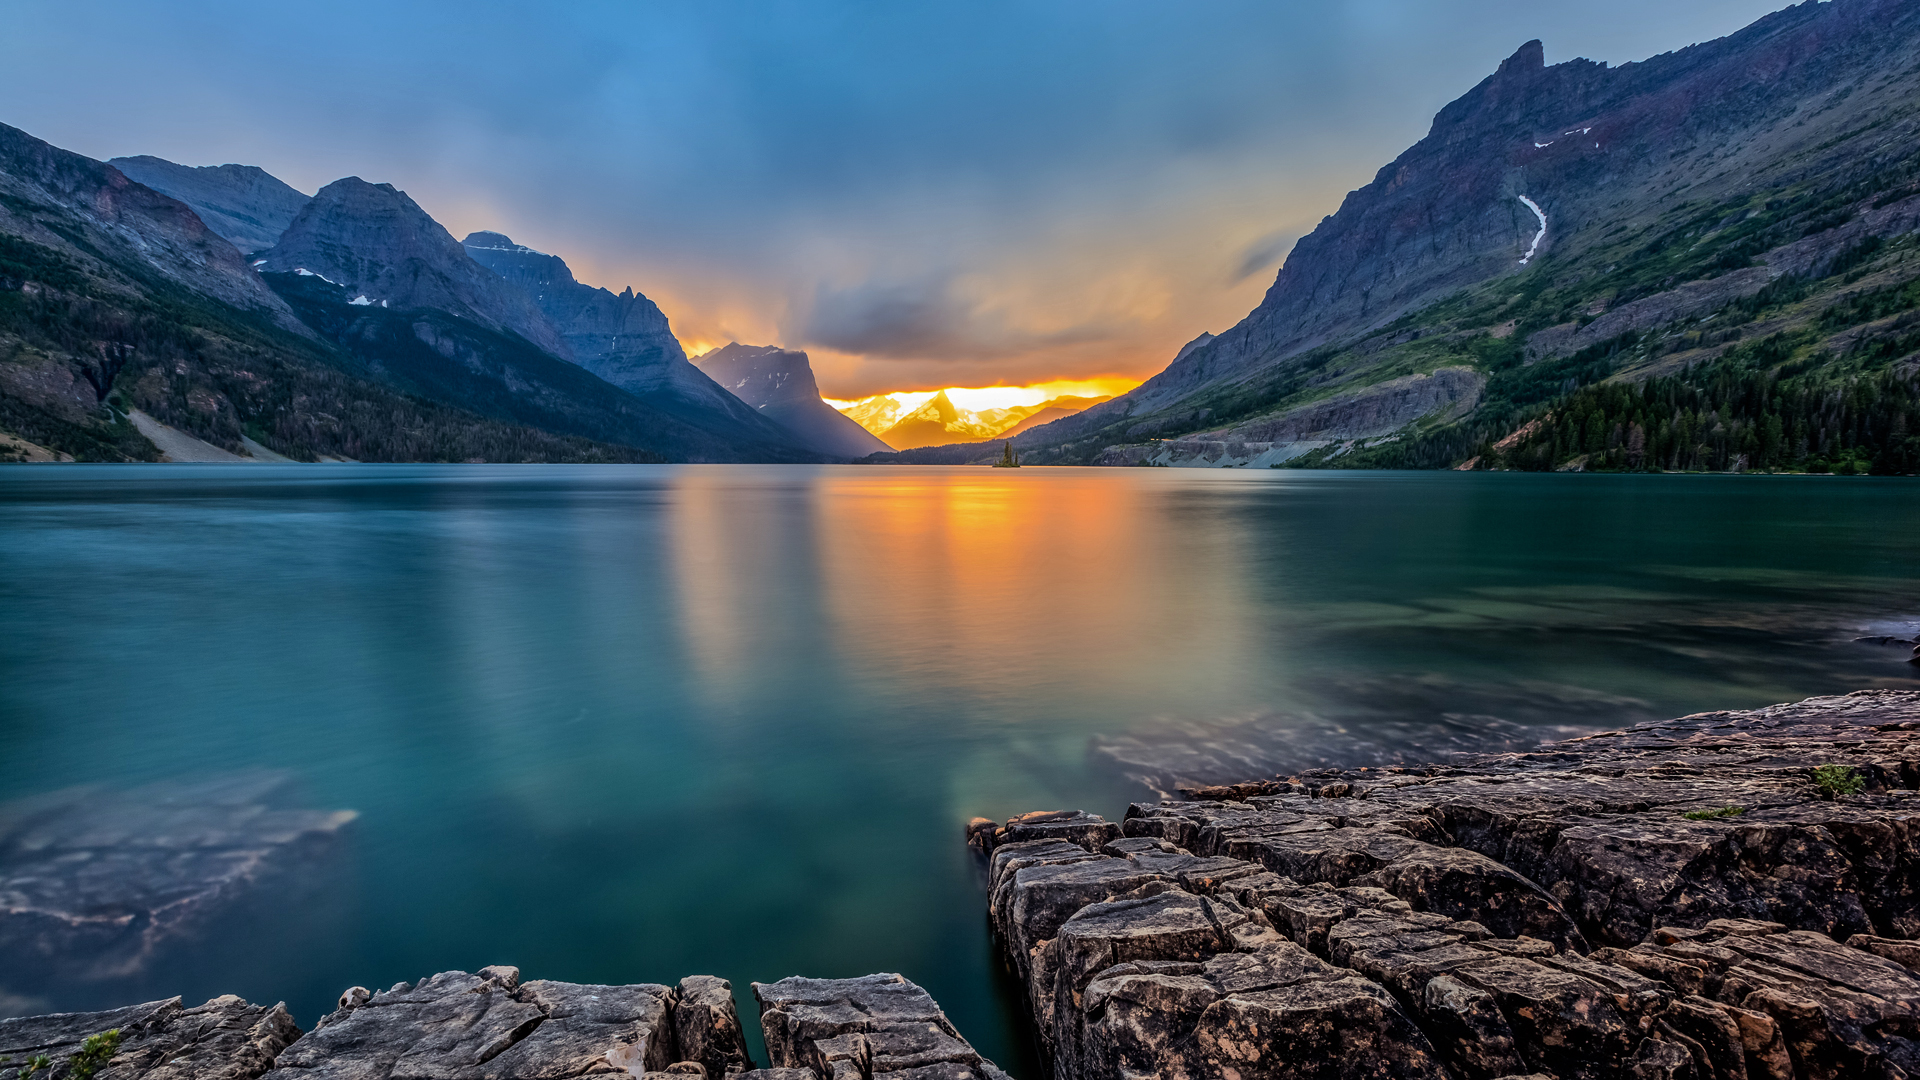 Sunset at Saint Mary Lake, Glacier national park, Montana, USA ...